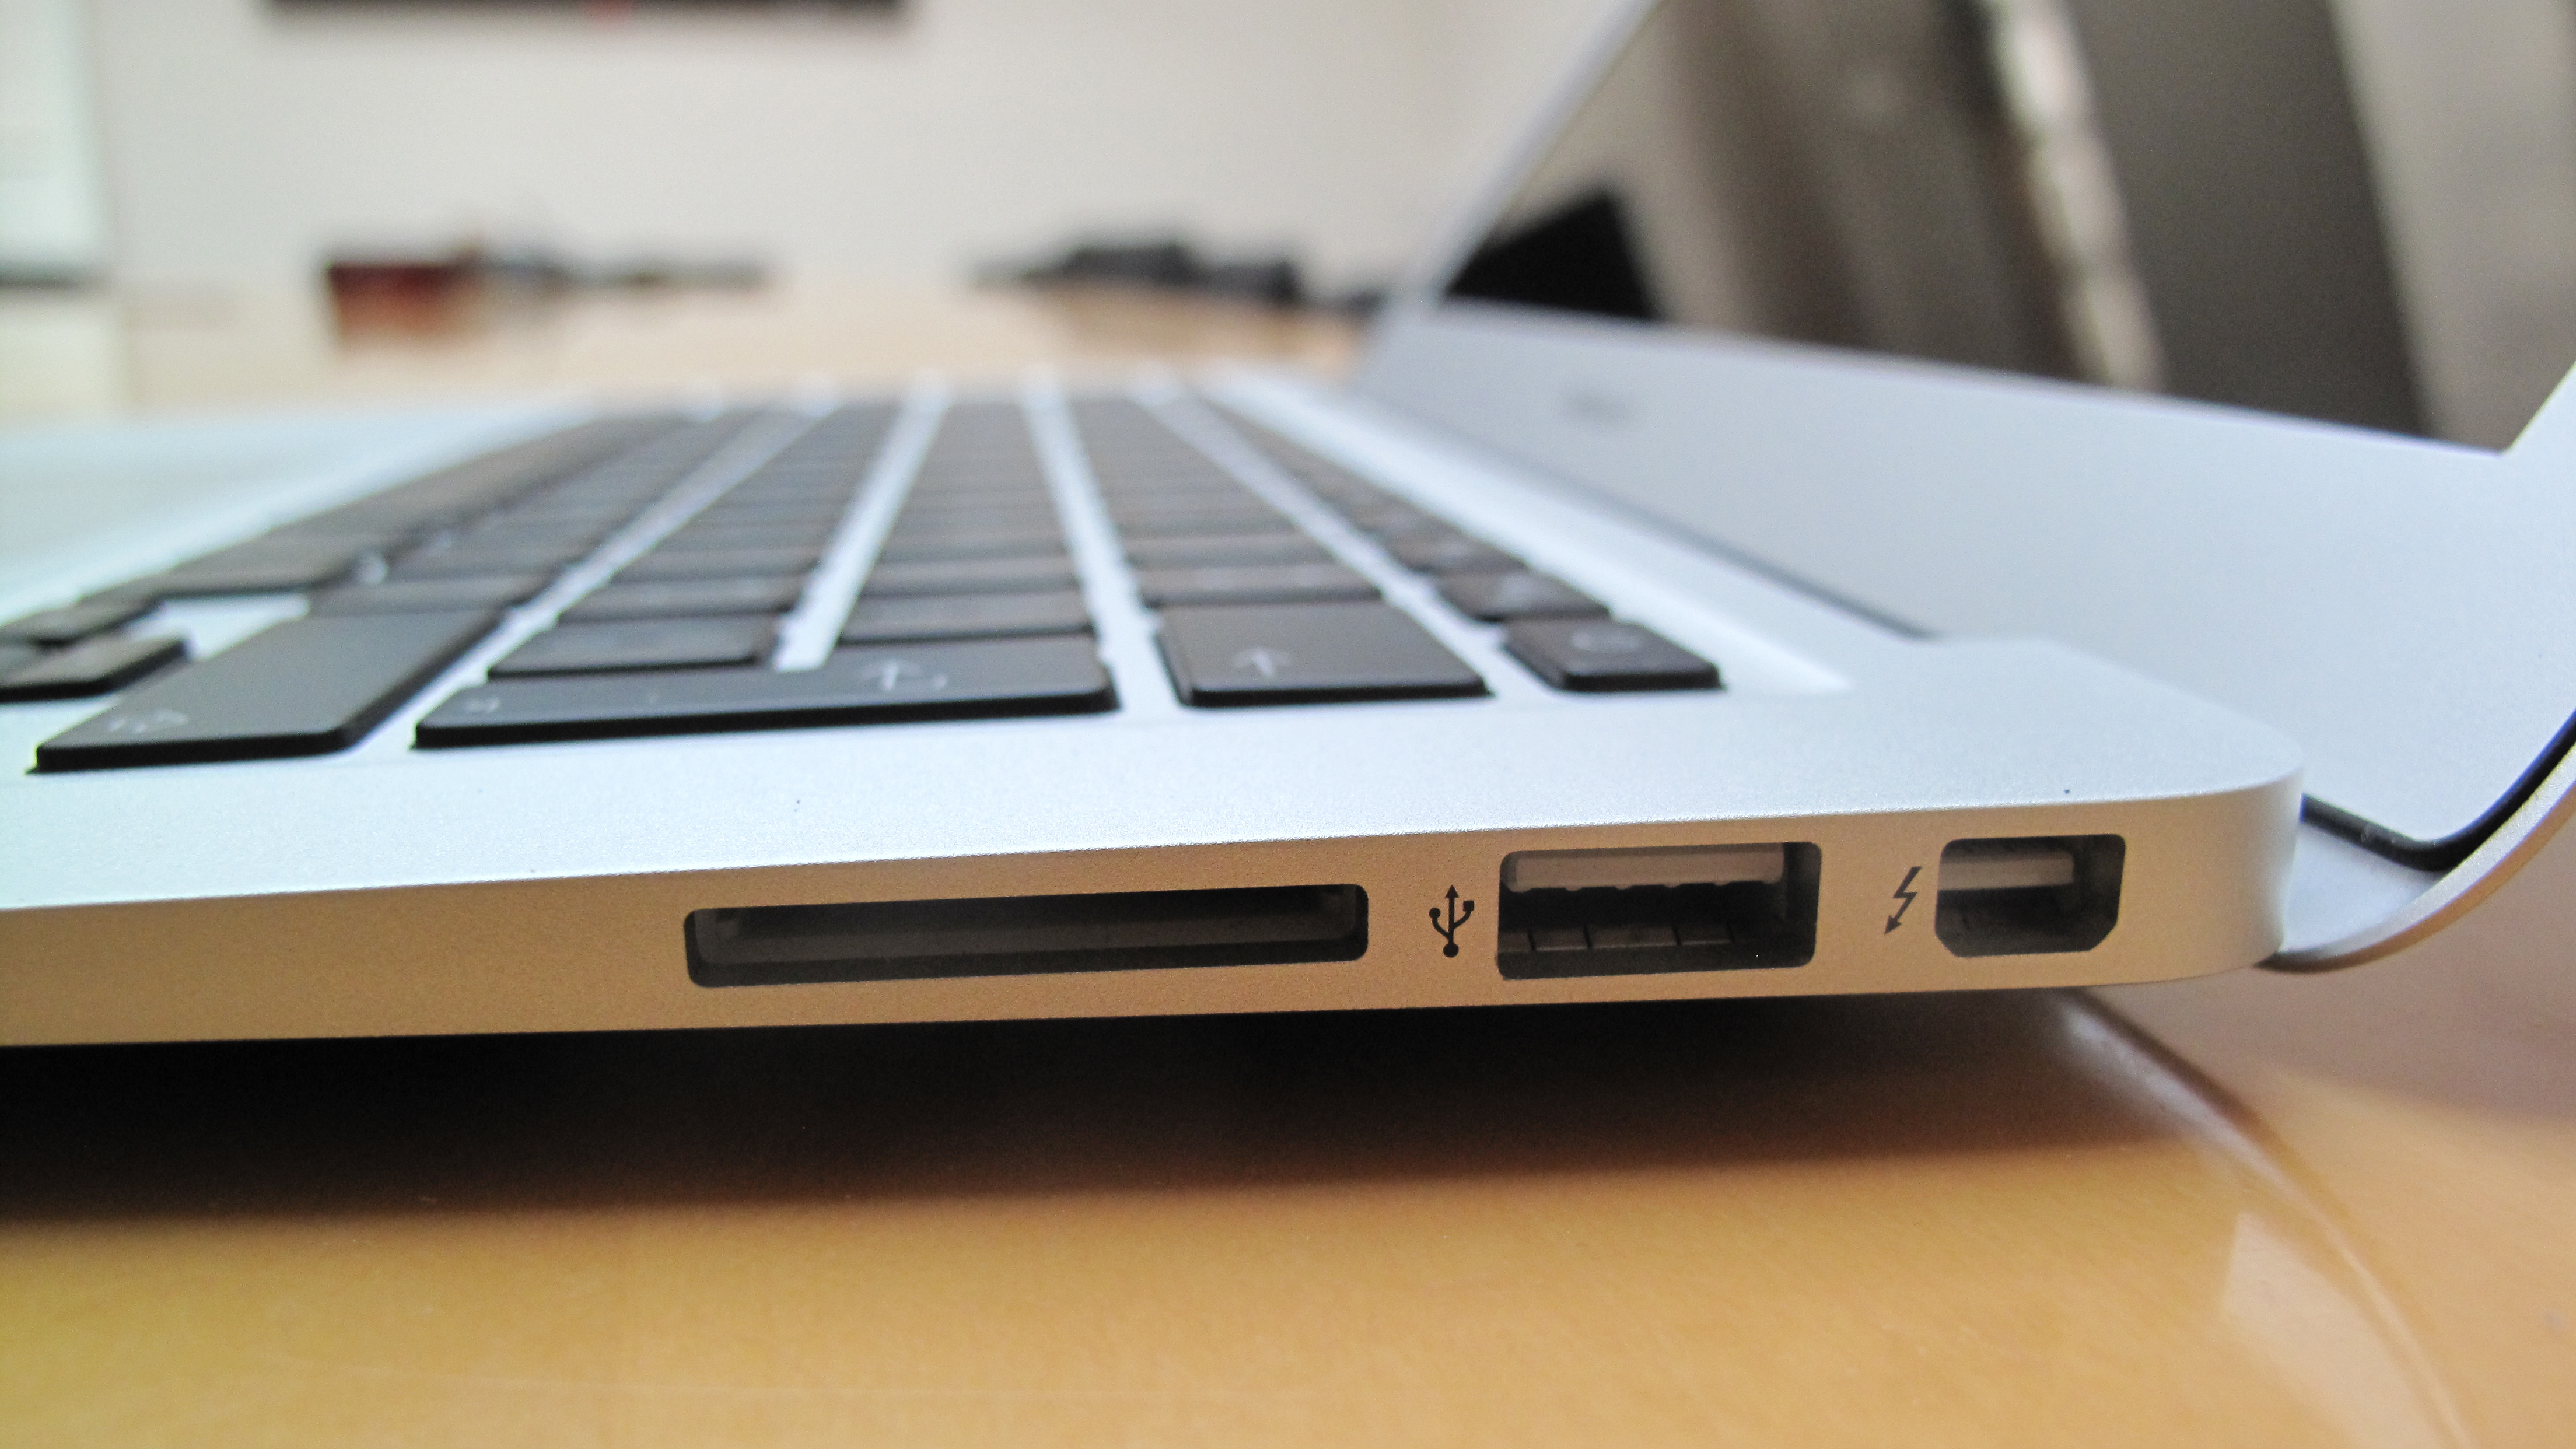 12 Inch Macbook Air With Retina Display May Be Delayed Until 15 Techradar